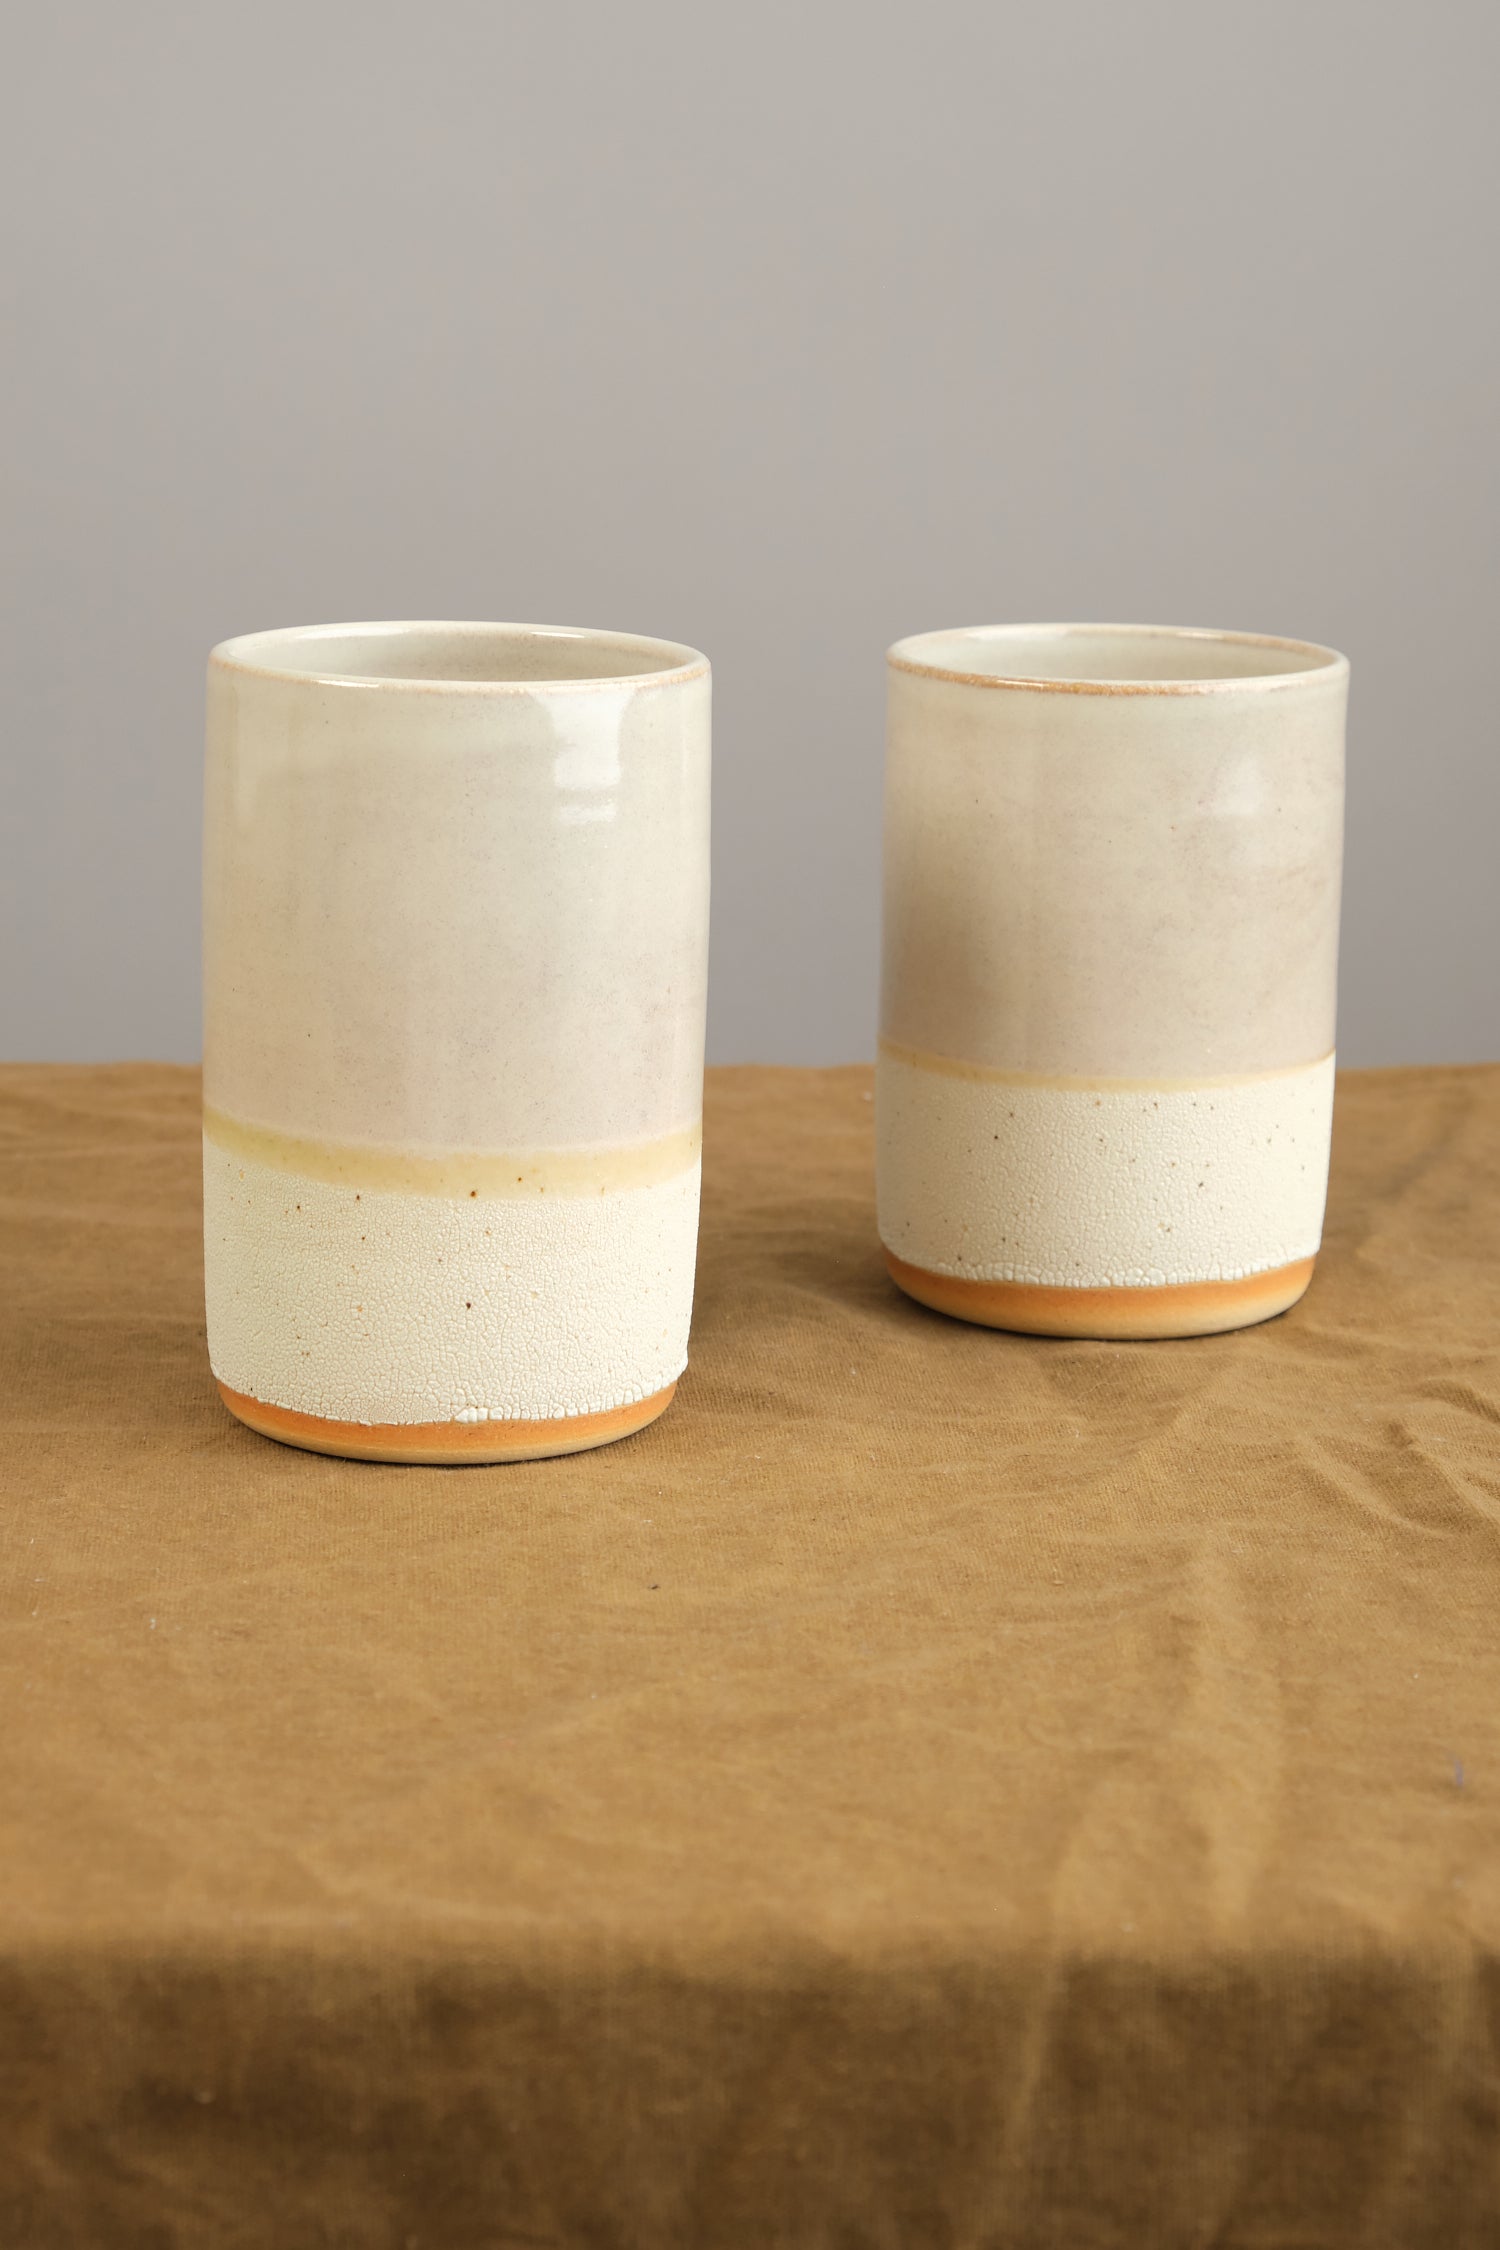 Jagermeister Cold Brew Metal Coffee Mug Cup White Porcelain Inside 14 oz